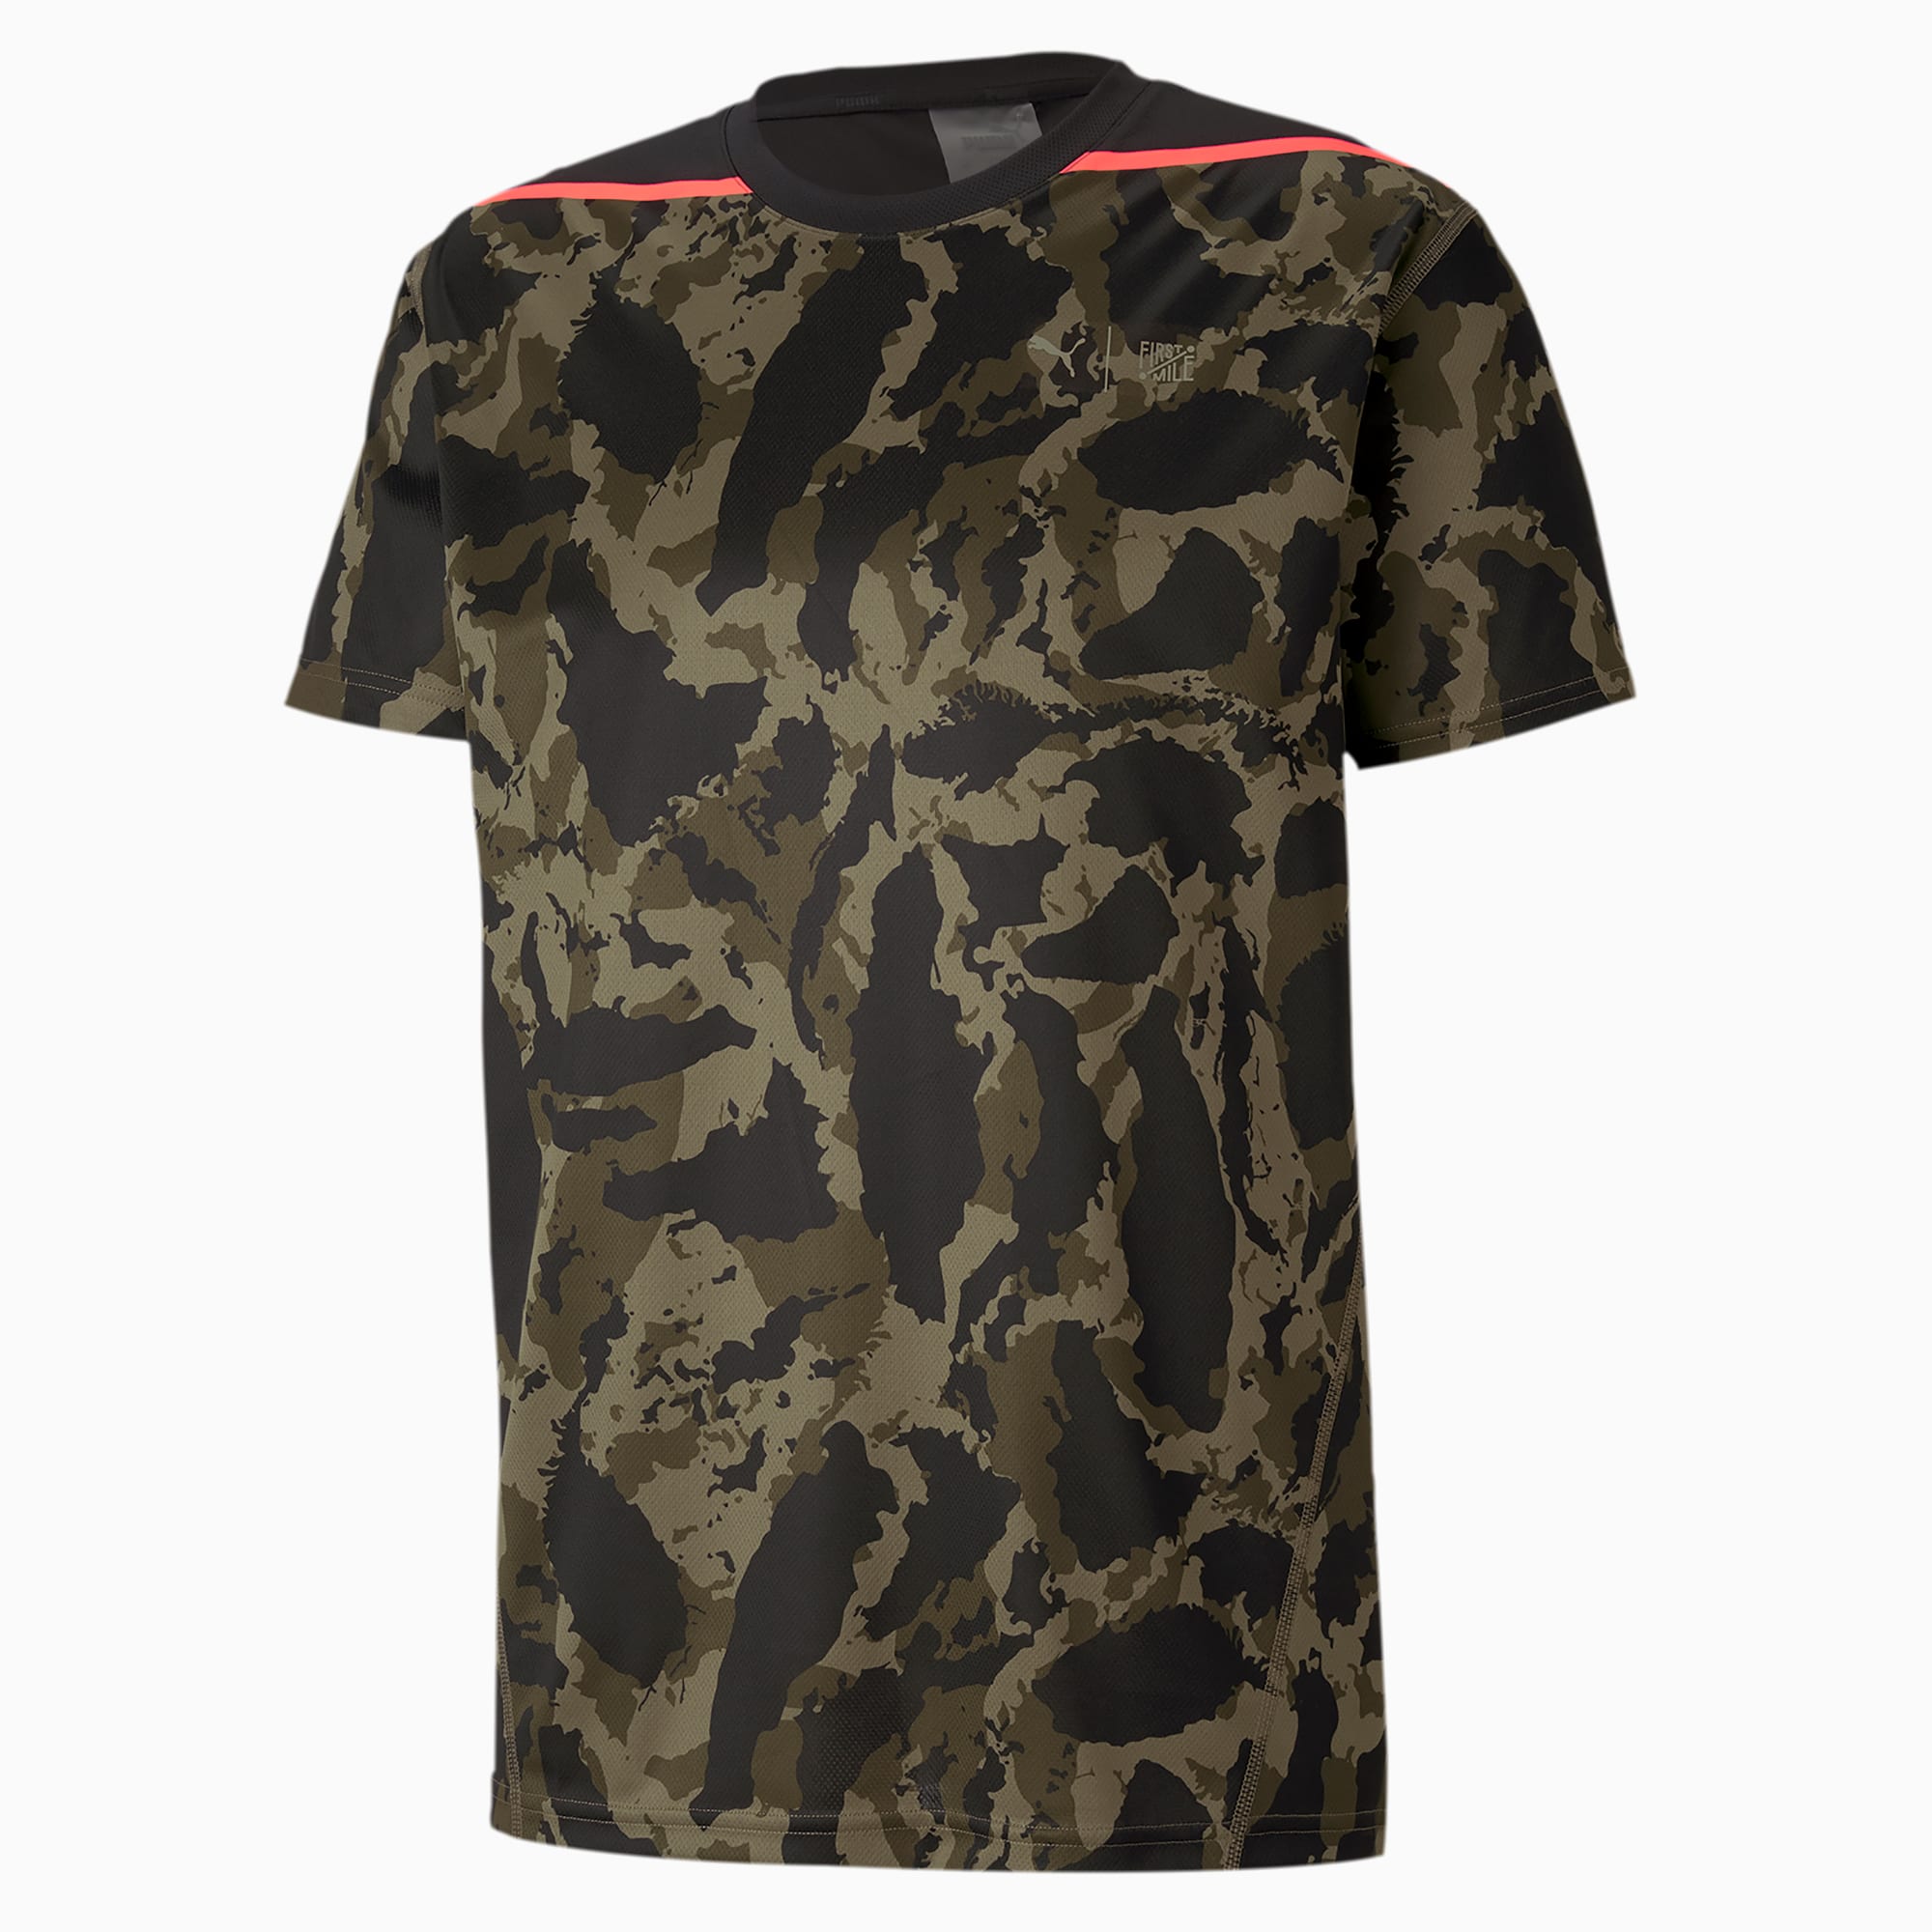 puma t shirt camouflage